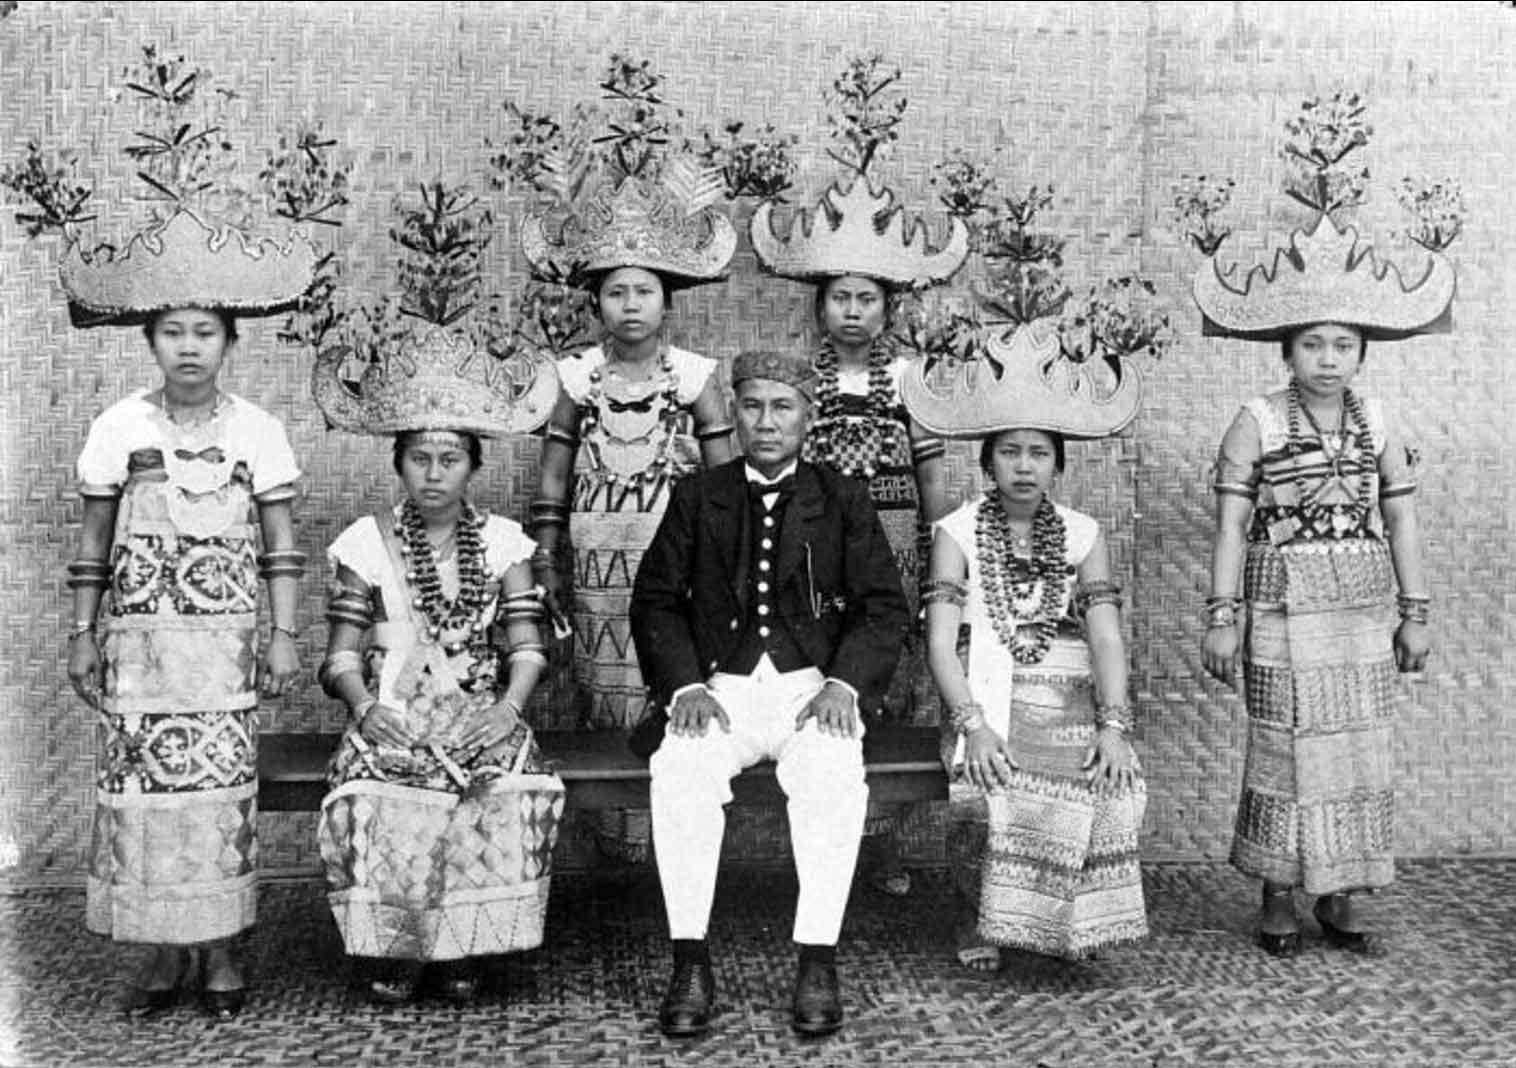 Members of an elite family in Lampung, Sumatra, 1922. Collection Nationaal Museum van Wereldculturen. Coll. No. ™-60035000. Southeast Asian Textiles